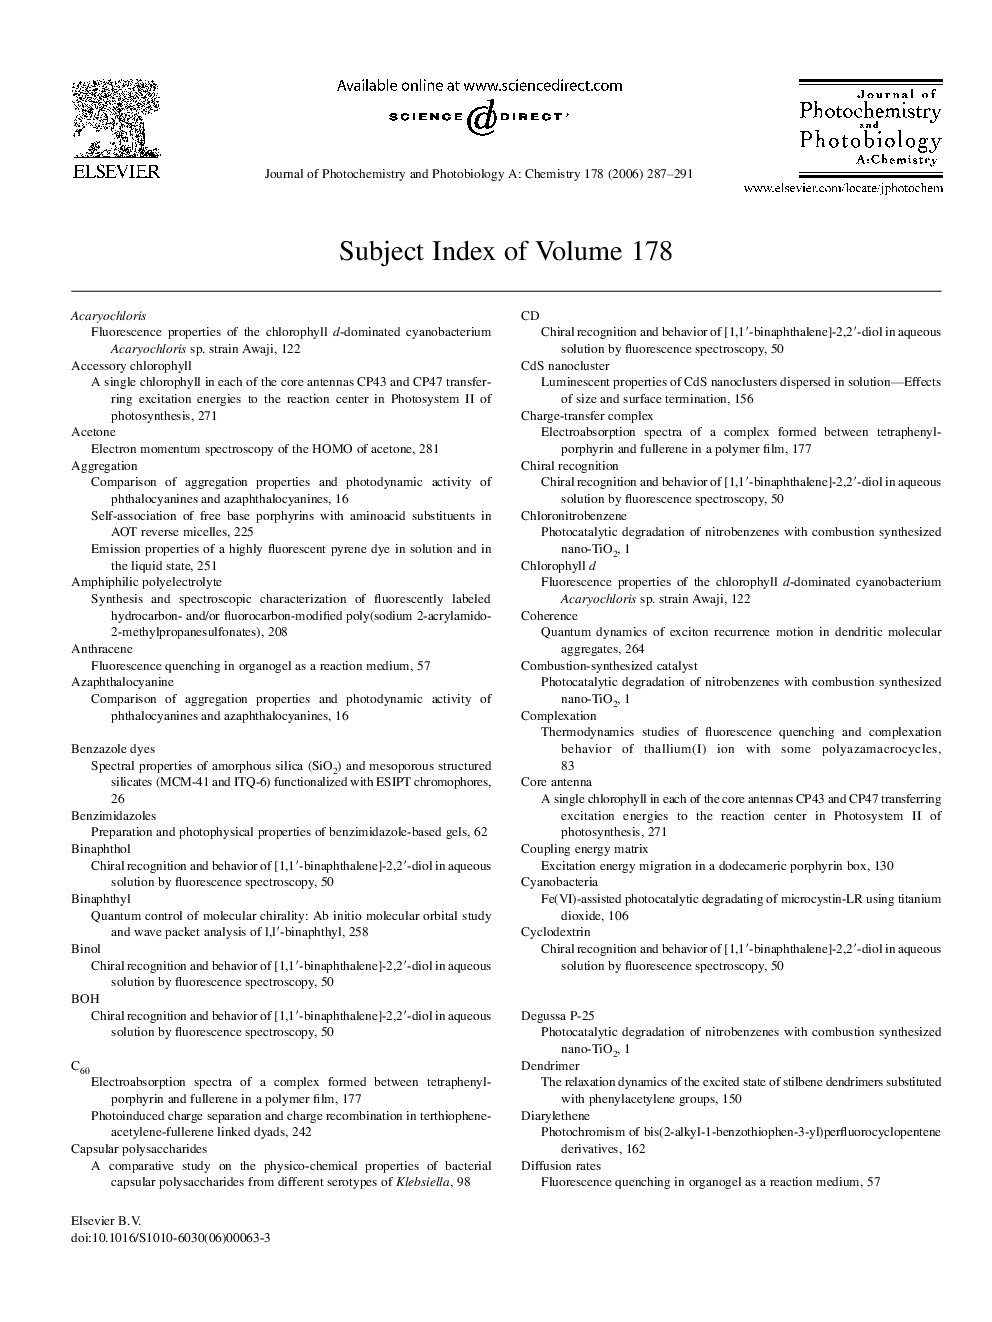 Subject Index of Volume 178